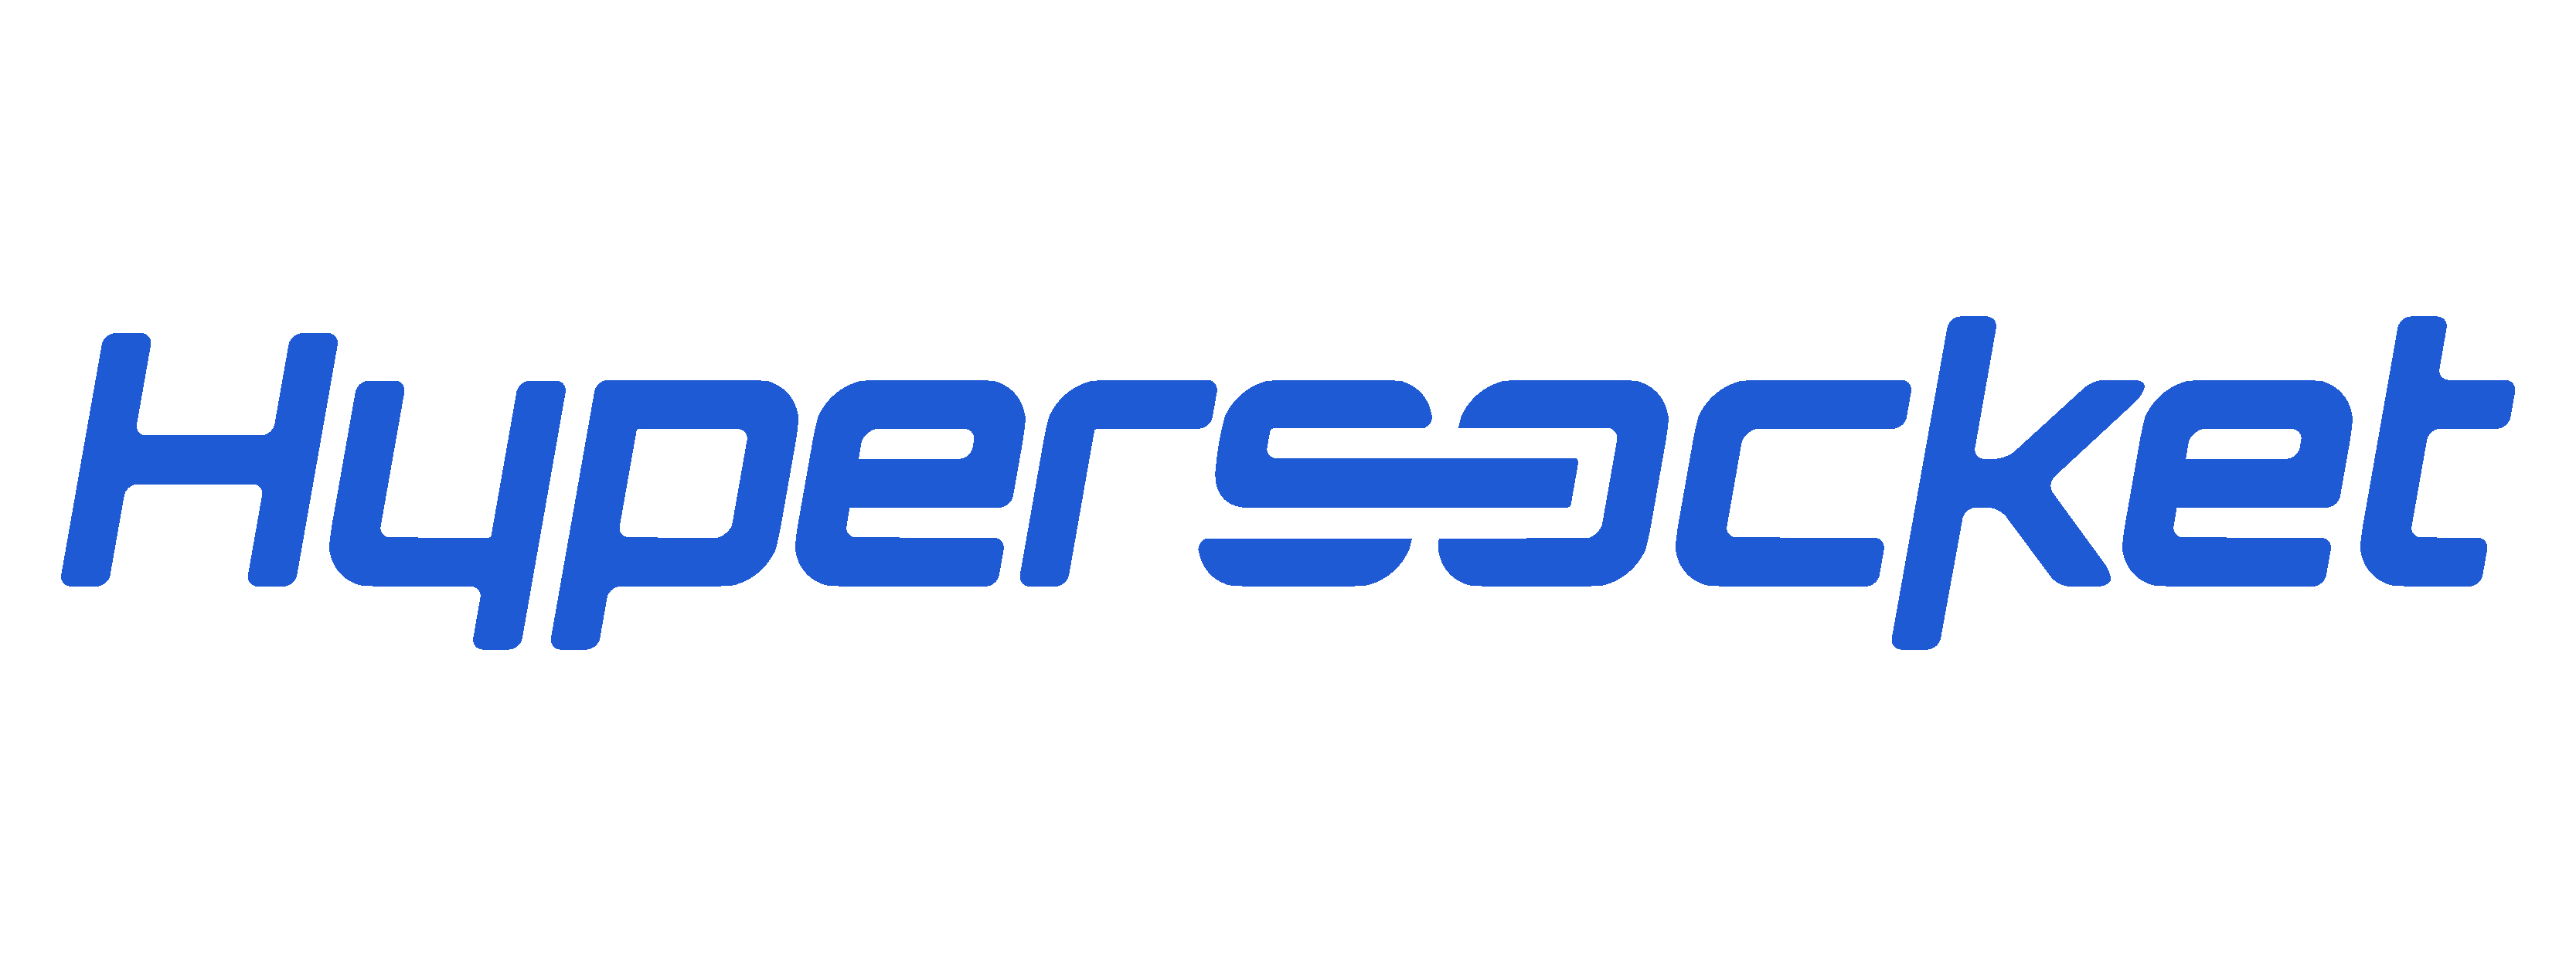 Hypersocket logo-01